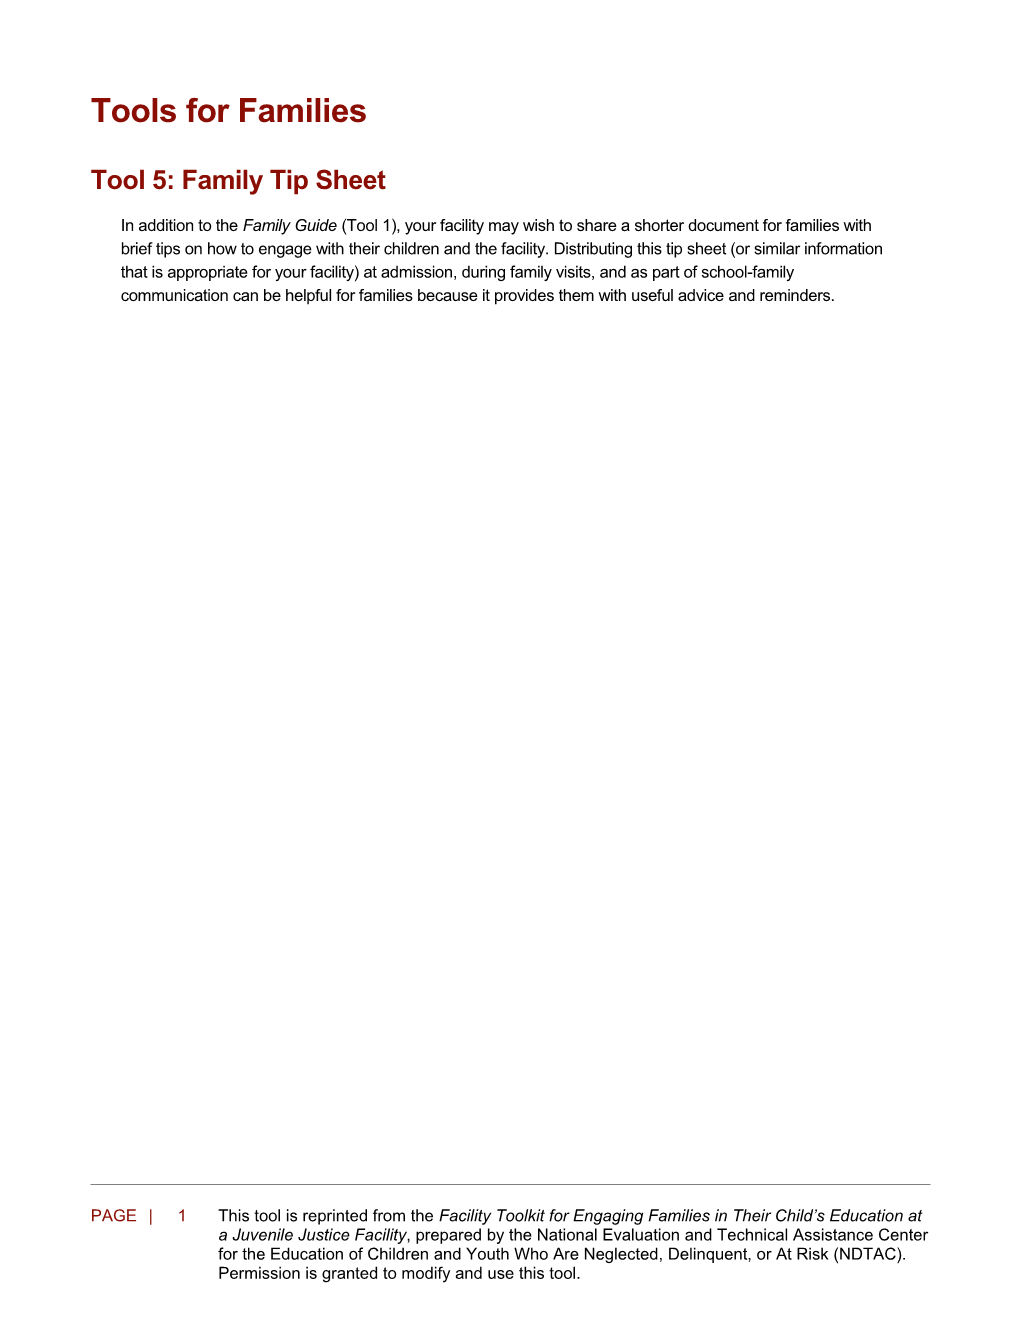 Tool 5: Family Tip Sheet